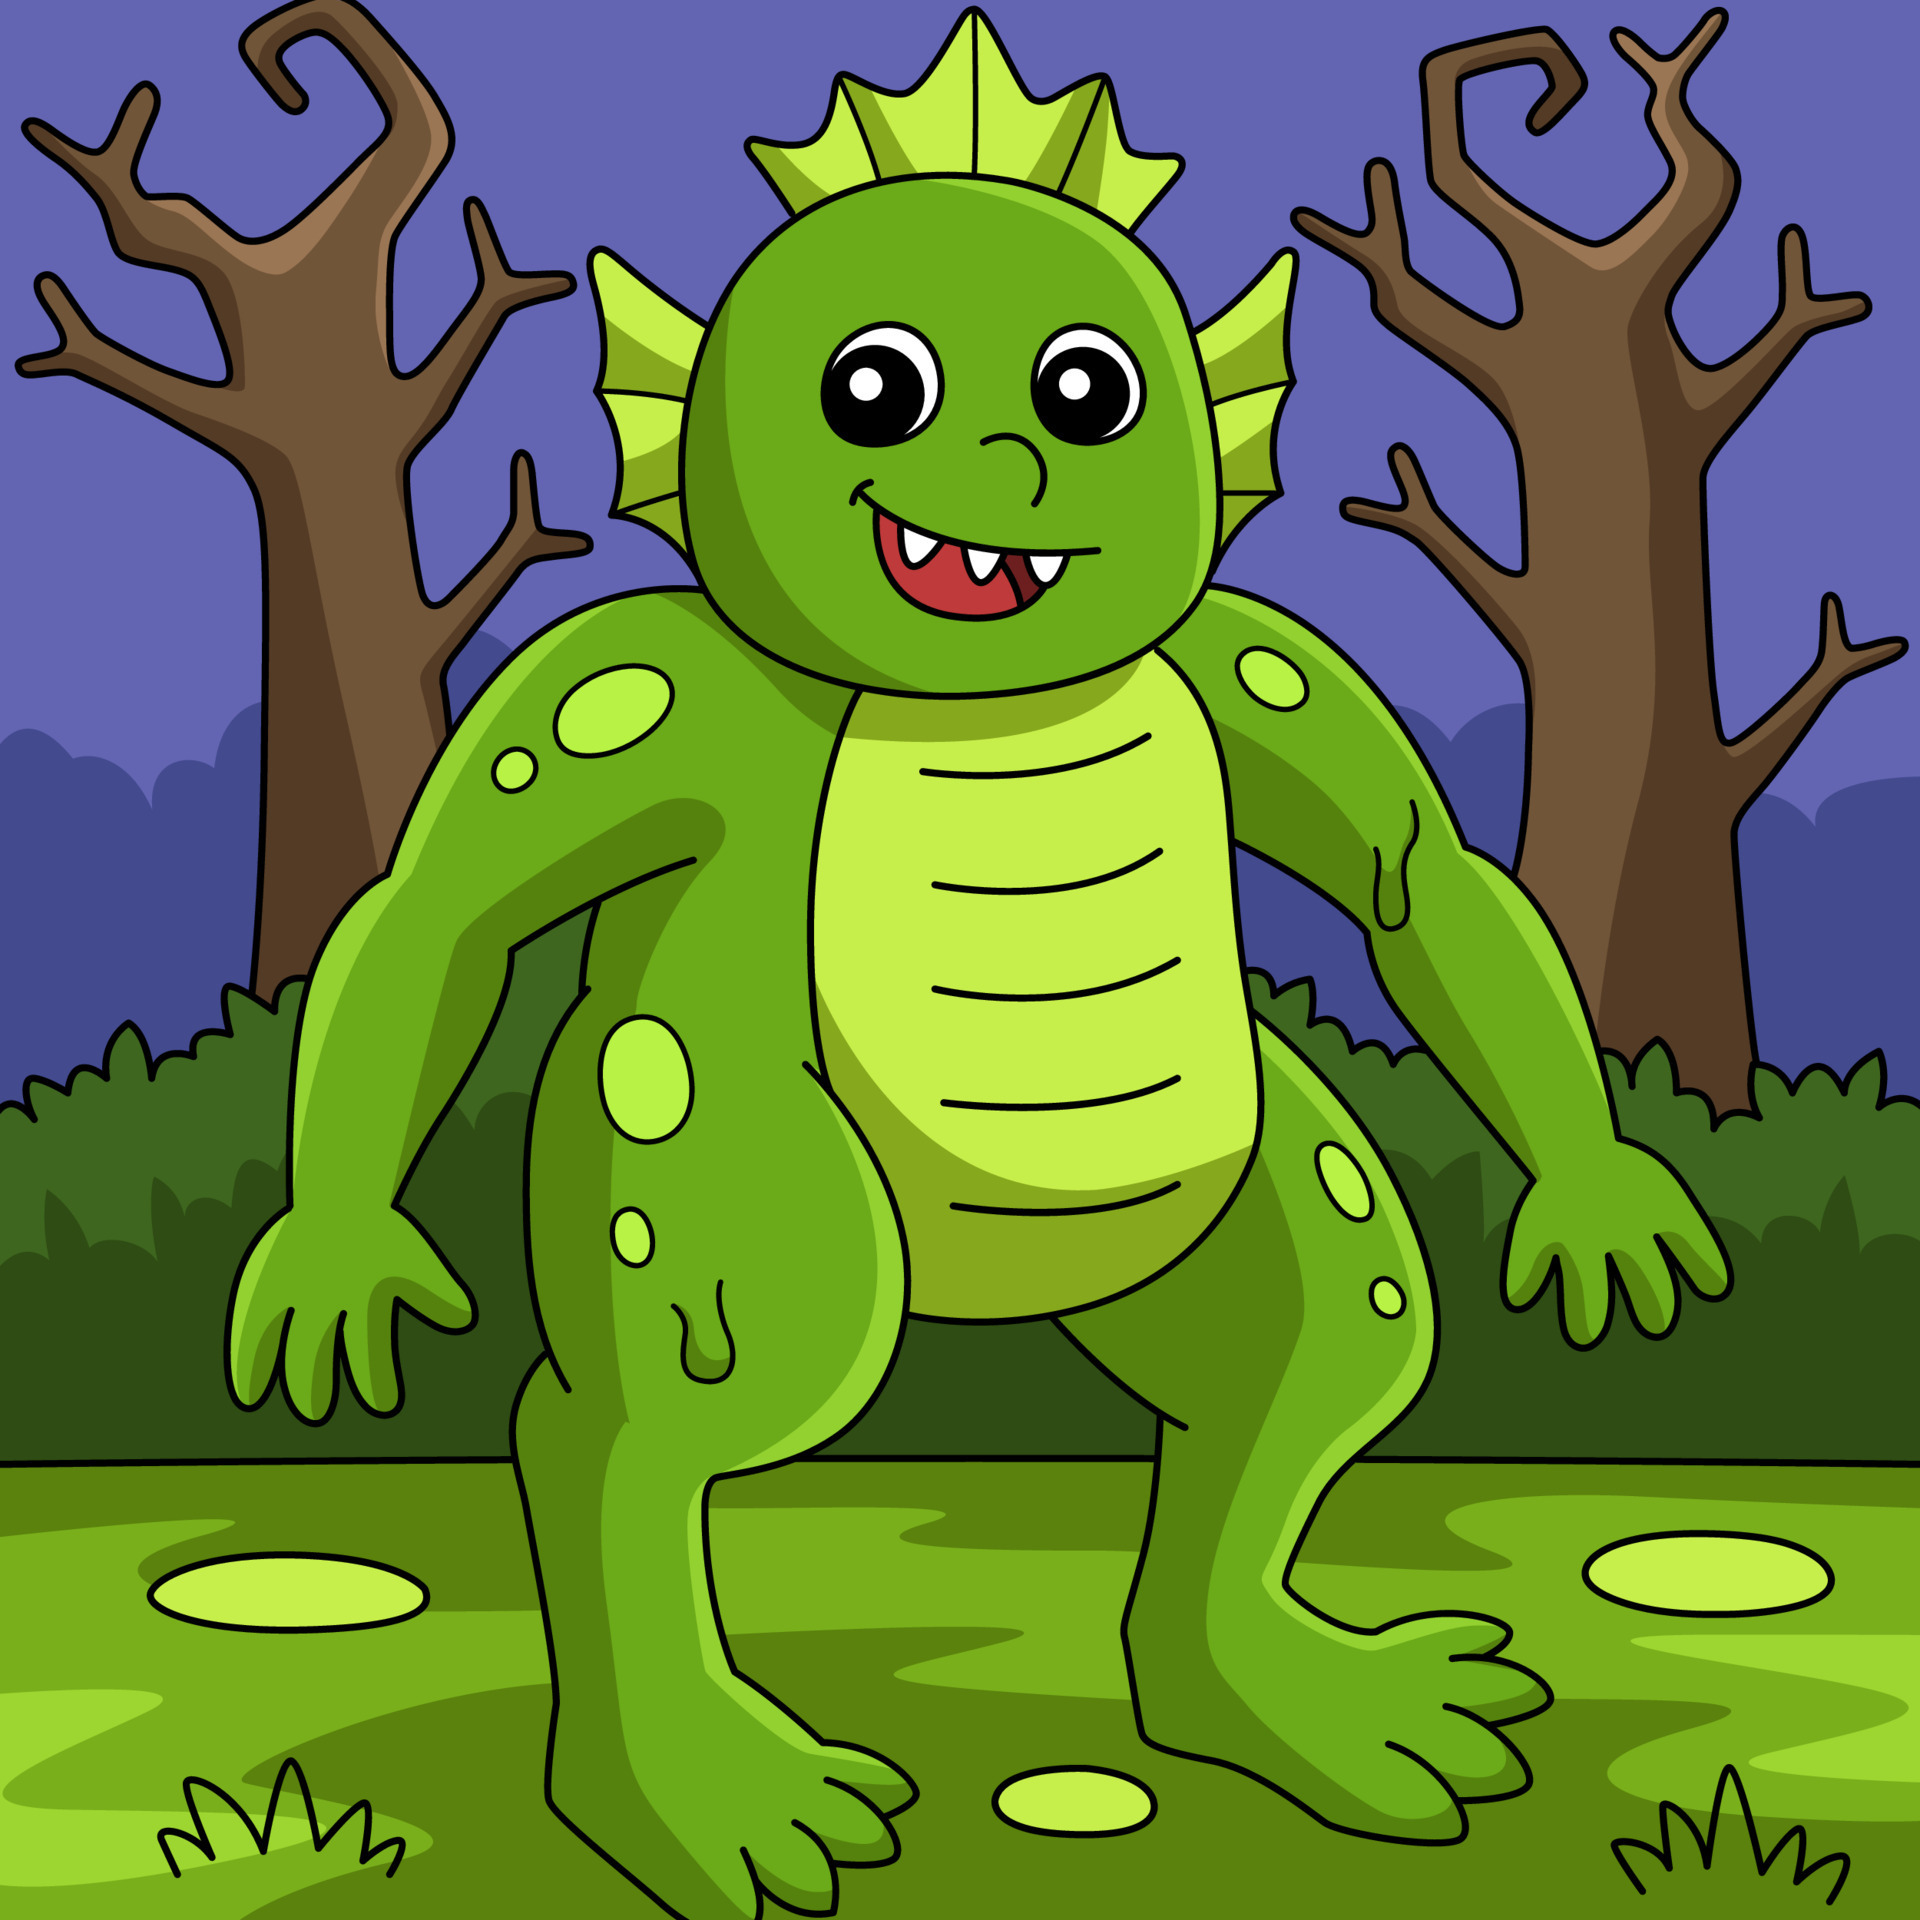 https://static.vecteezy.com/system/resources/previews/007/528/222/original/swamp-monster-halloween-colored-illustration-free-vector.jpg